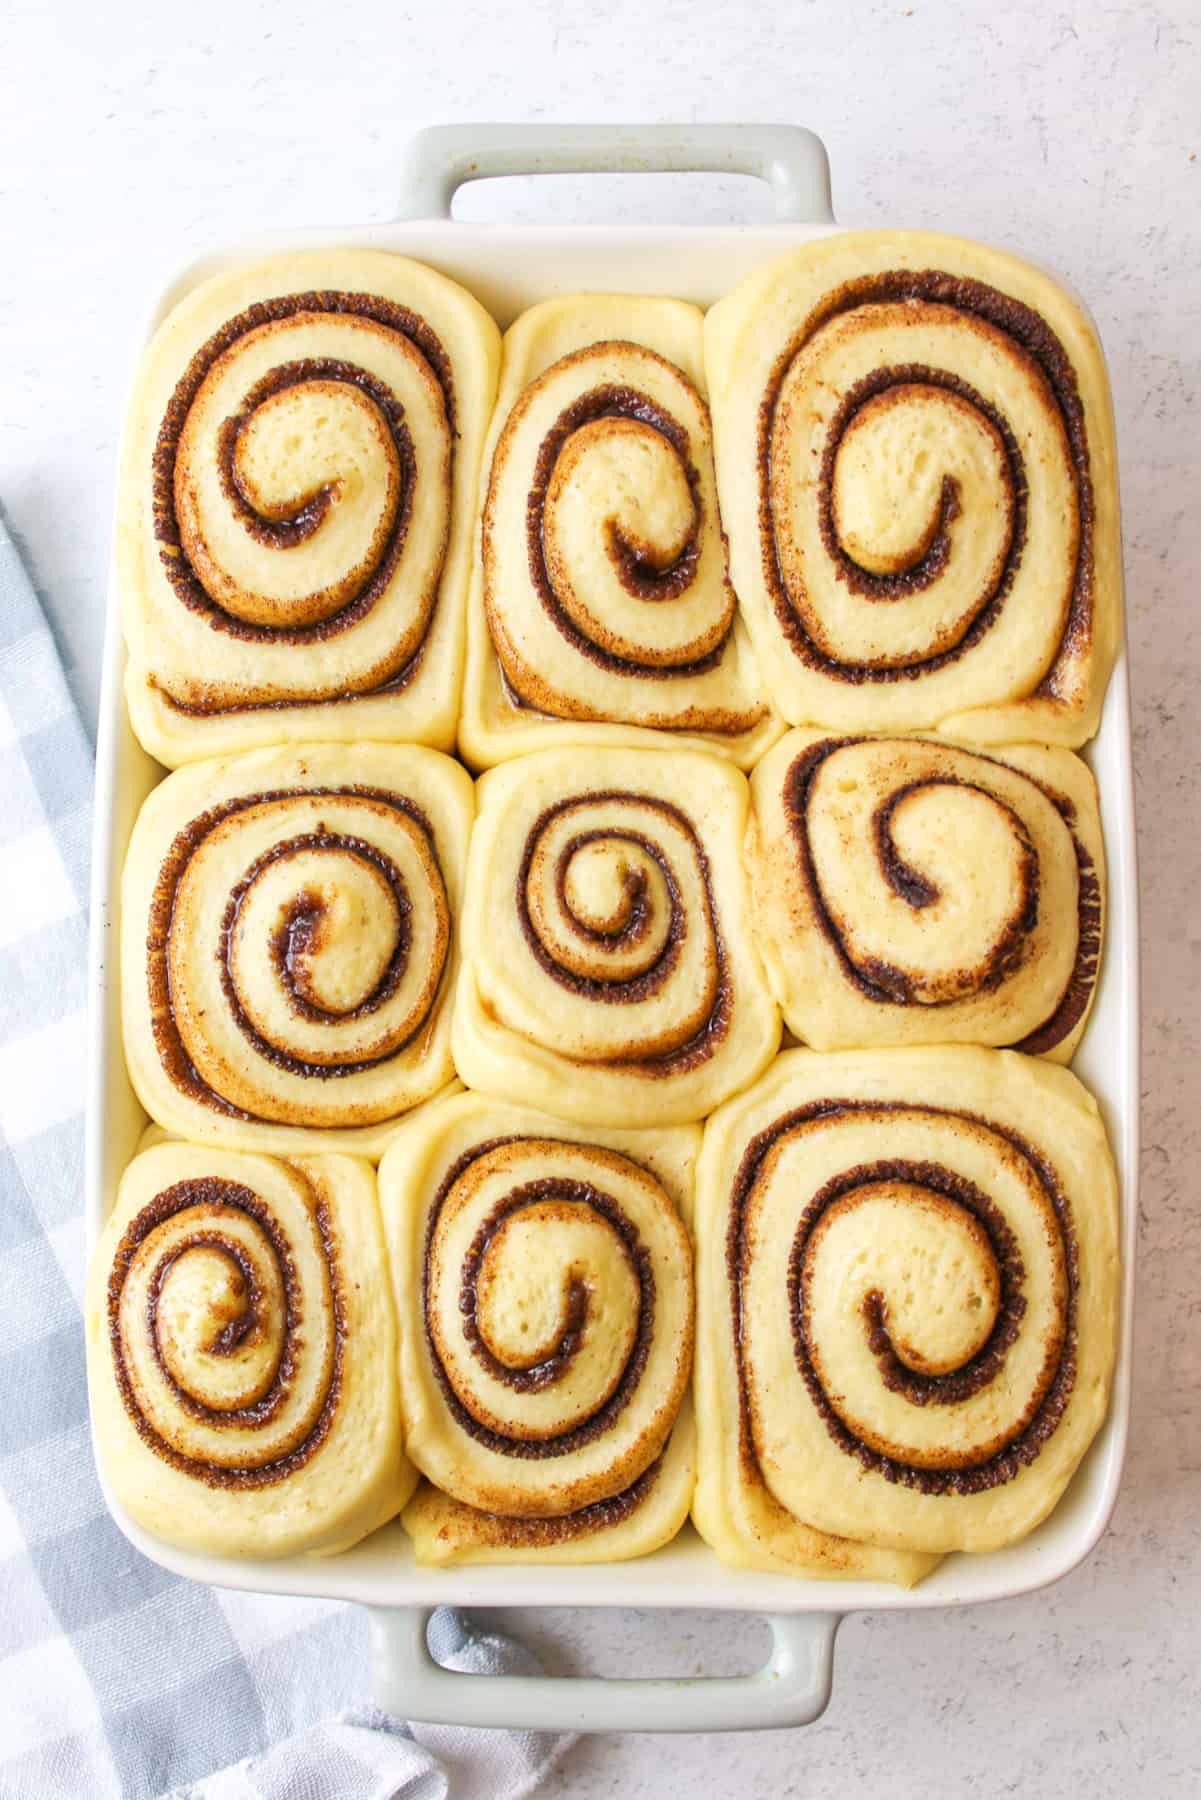 9 risen cinnamon rolls in a baking dish